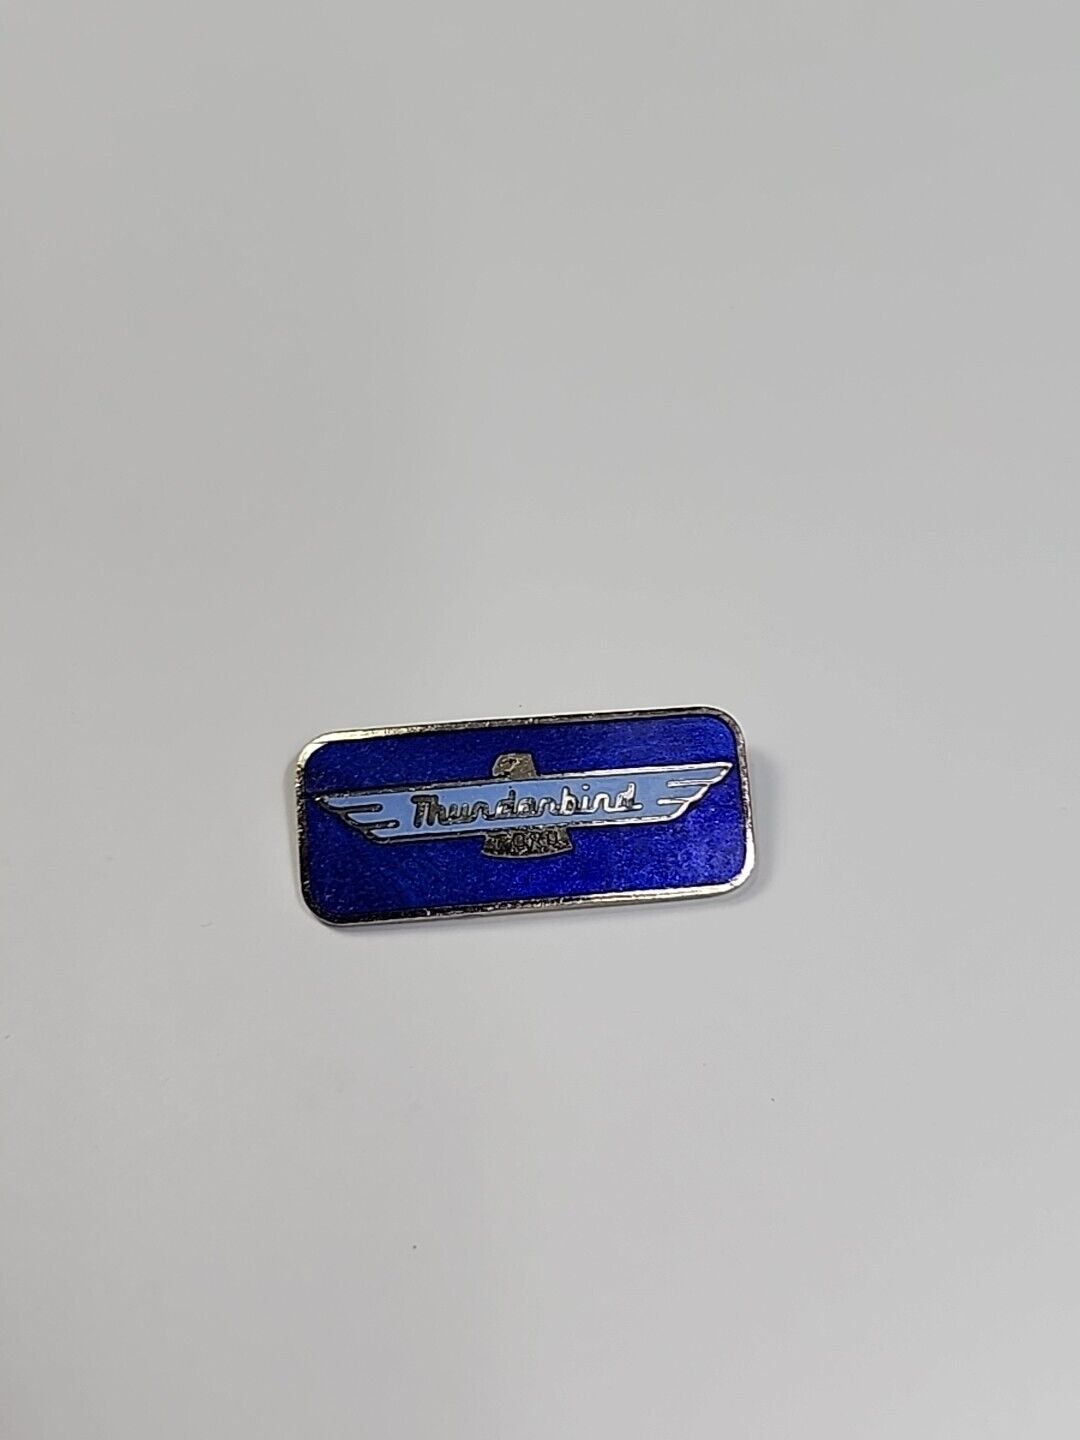 Ford Thunderbird Logo Lapel Pin Shades of Blue & Silver Colors RARE